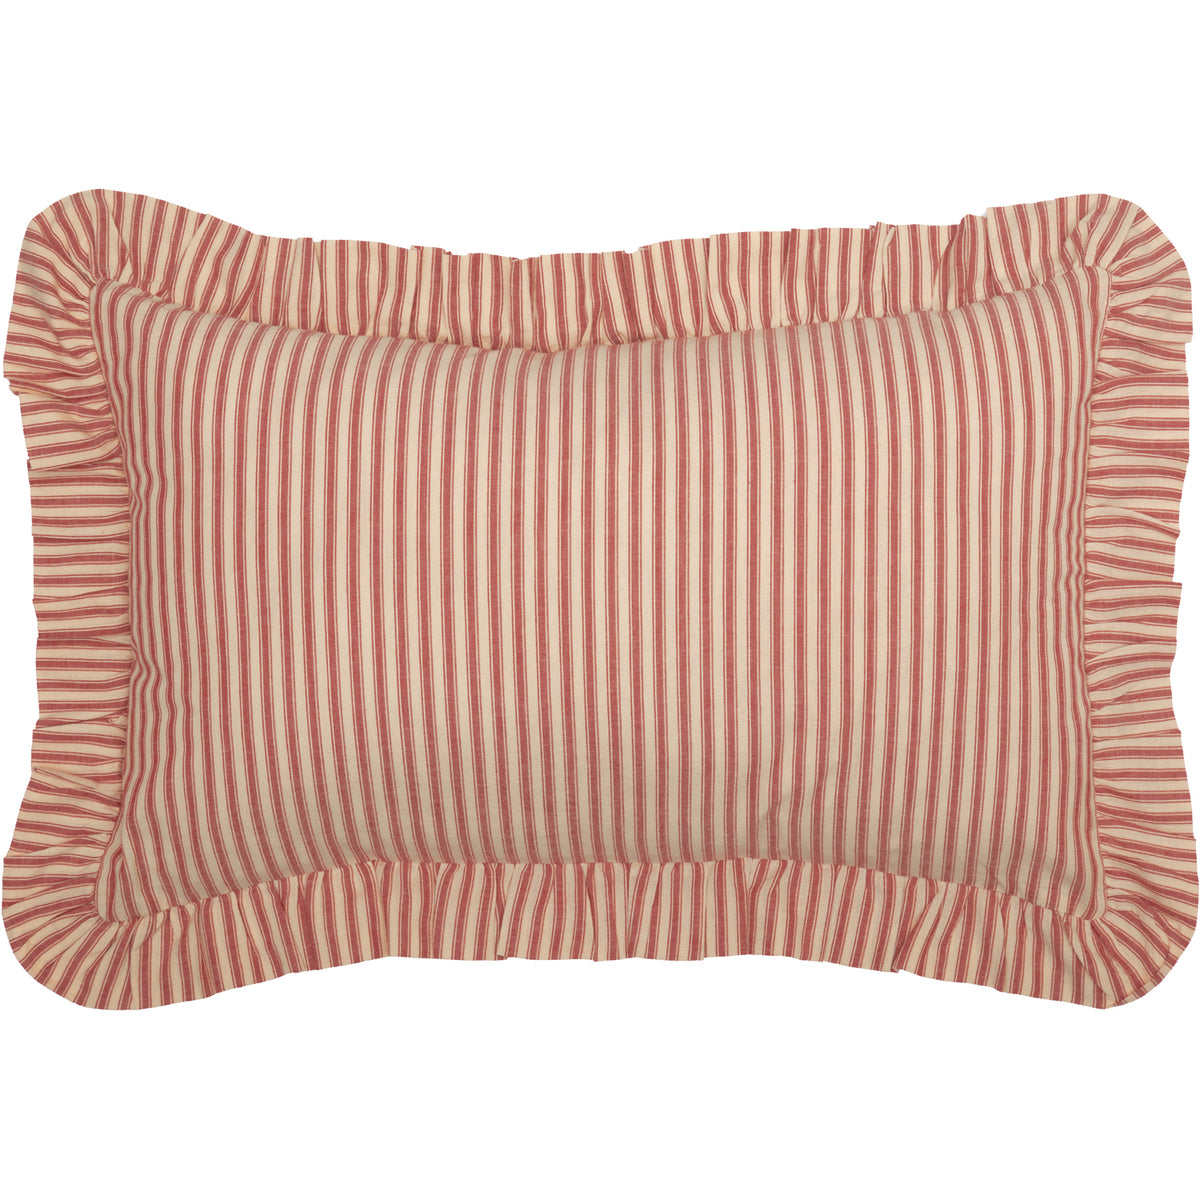 Sawyer Mill Red Ticking Stripe Fabric Pillow 14x22